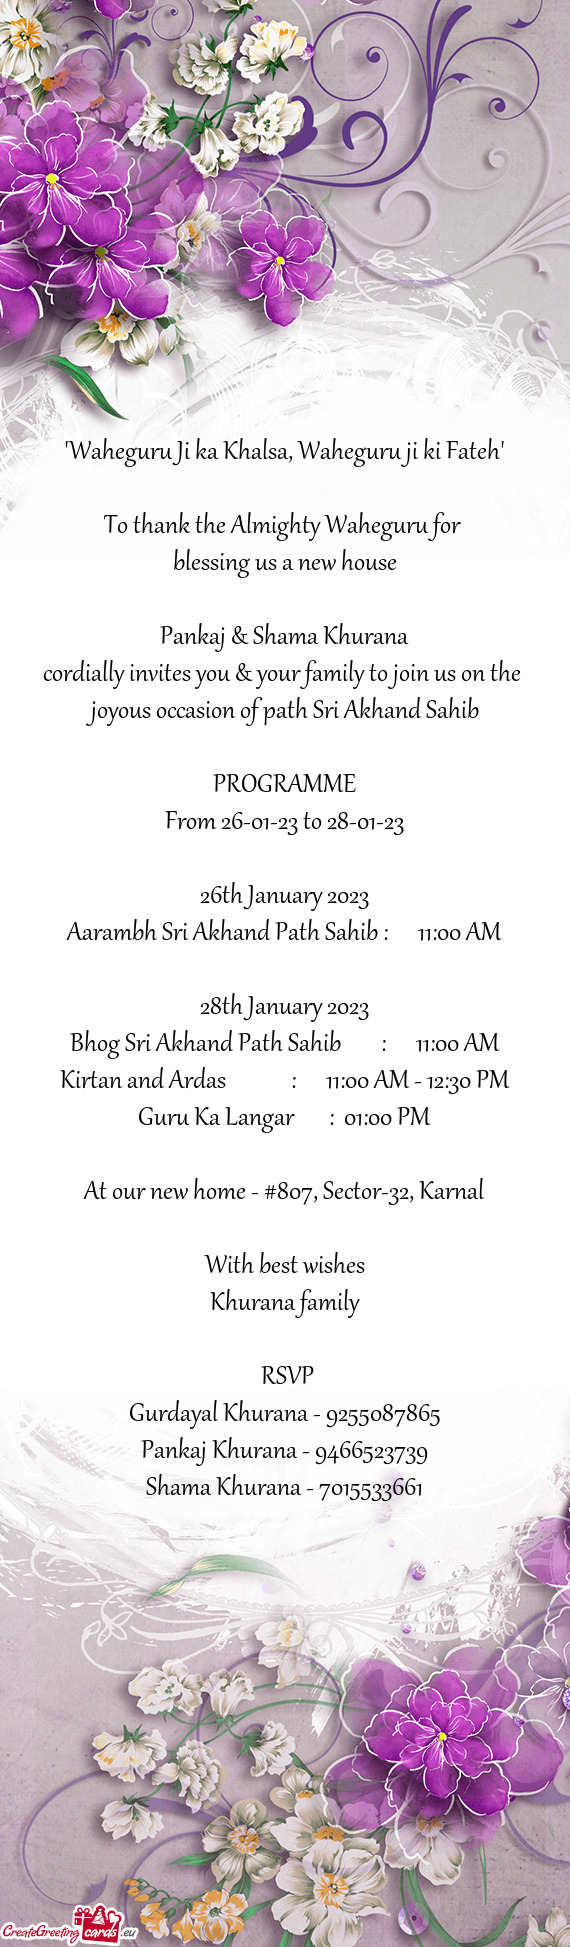 Joyous occasion of path Sri Akhand Sahib